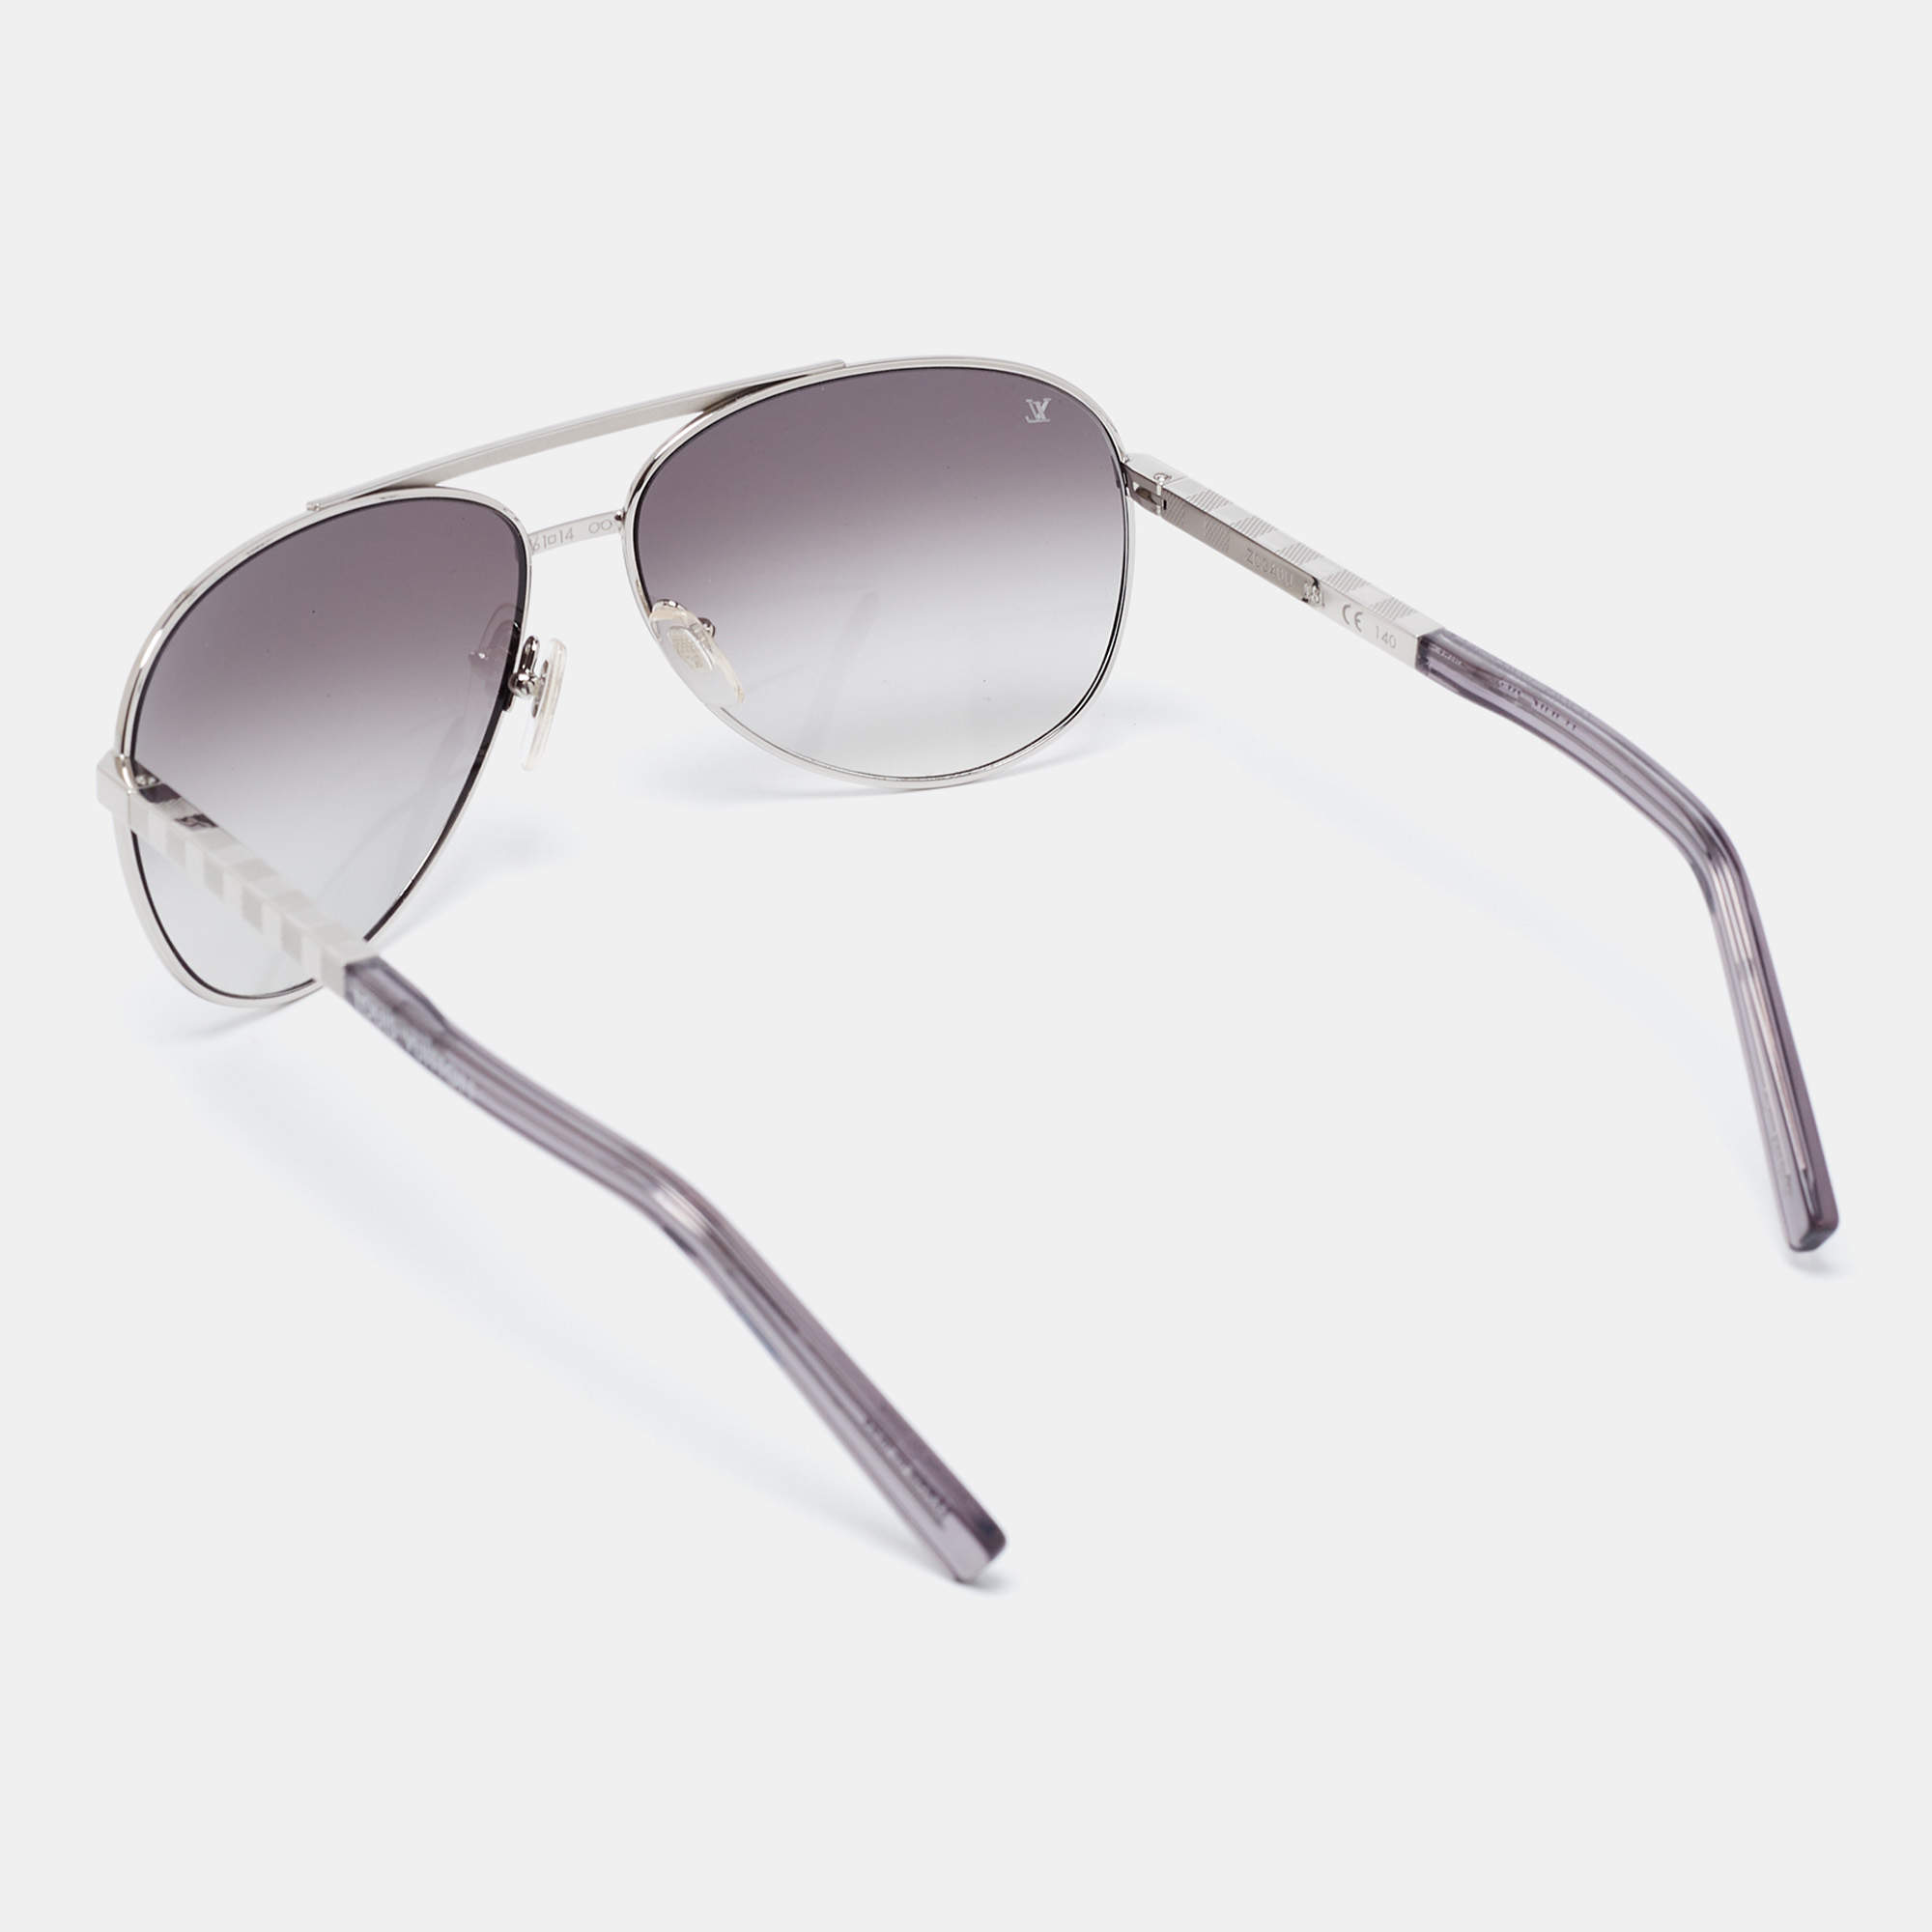 Buy LOUIS VUITTON Attitude Pilote Aviator Men Sunglasses Argent [Z0340U]  Online - Best Price LOUIS VUITTON Attitude Pilote Aviator Men Sunglasses  Argent [Z0340U] - Justdial Shop Online.